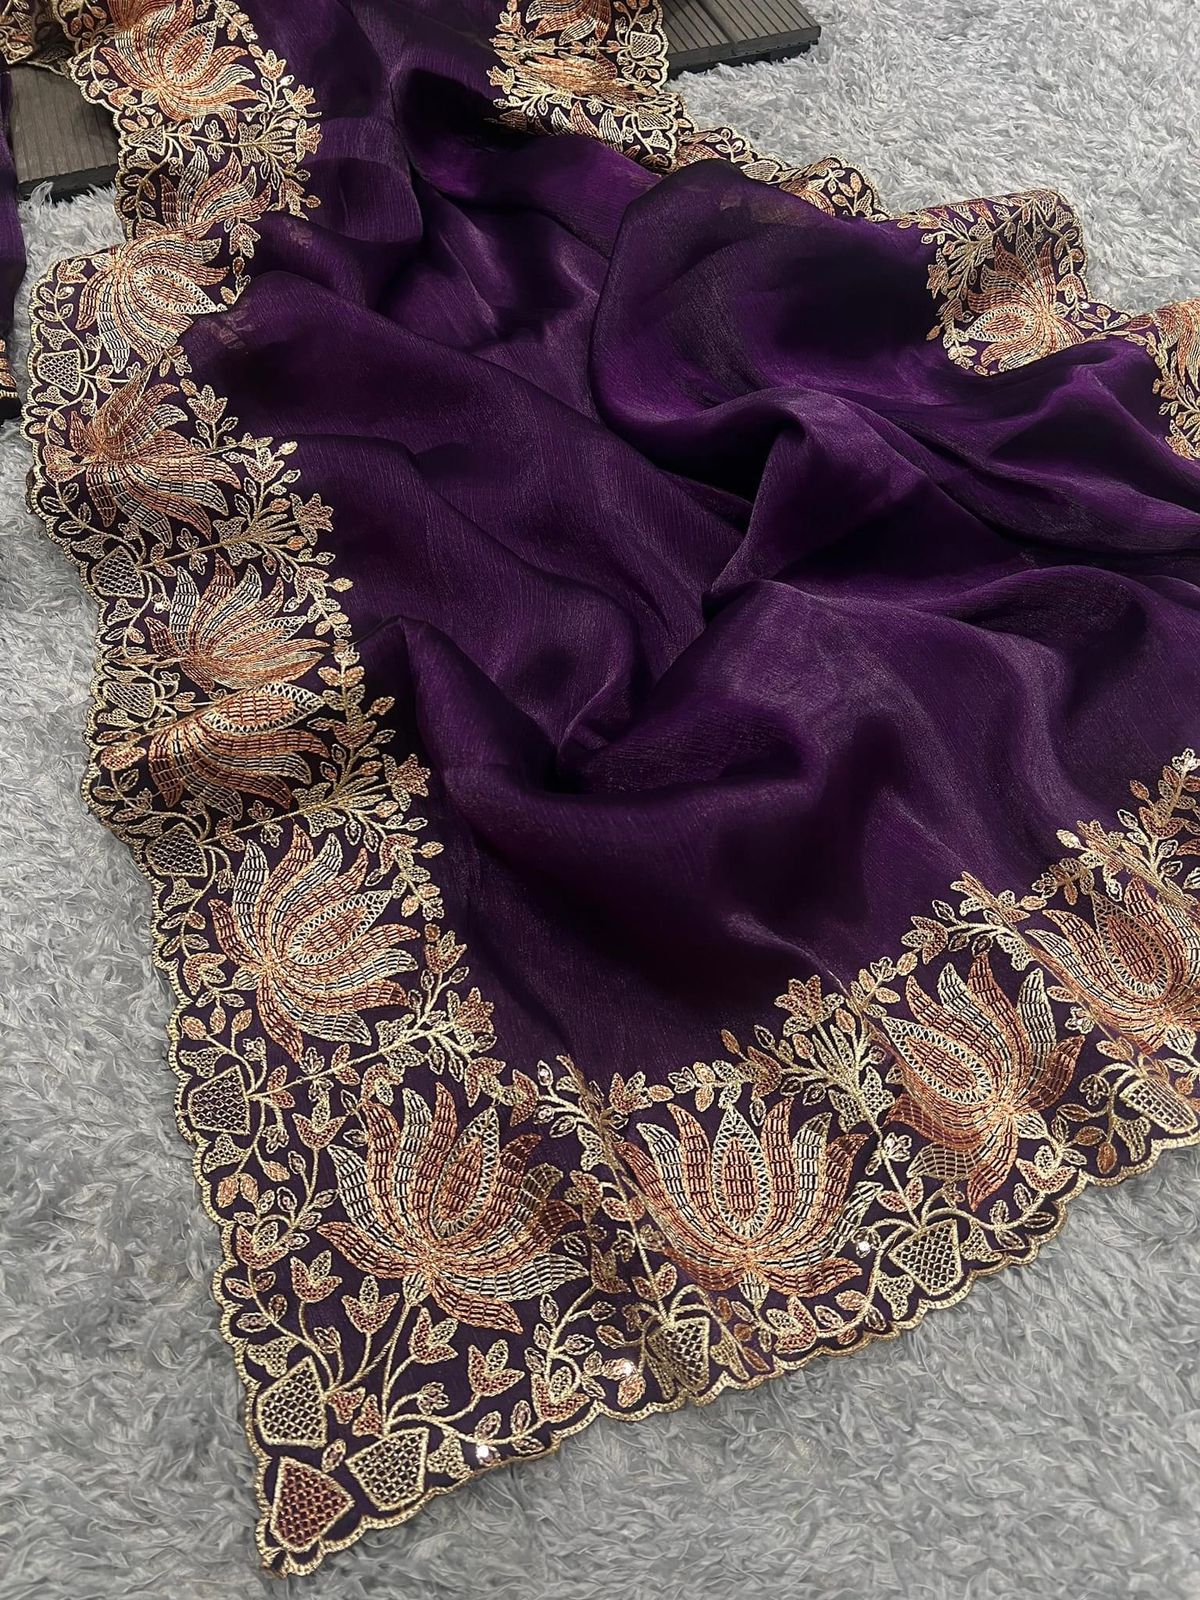 Dark Purple Burberry Silk Zari Work Saree - Shopaholics Choice